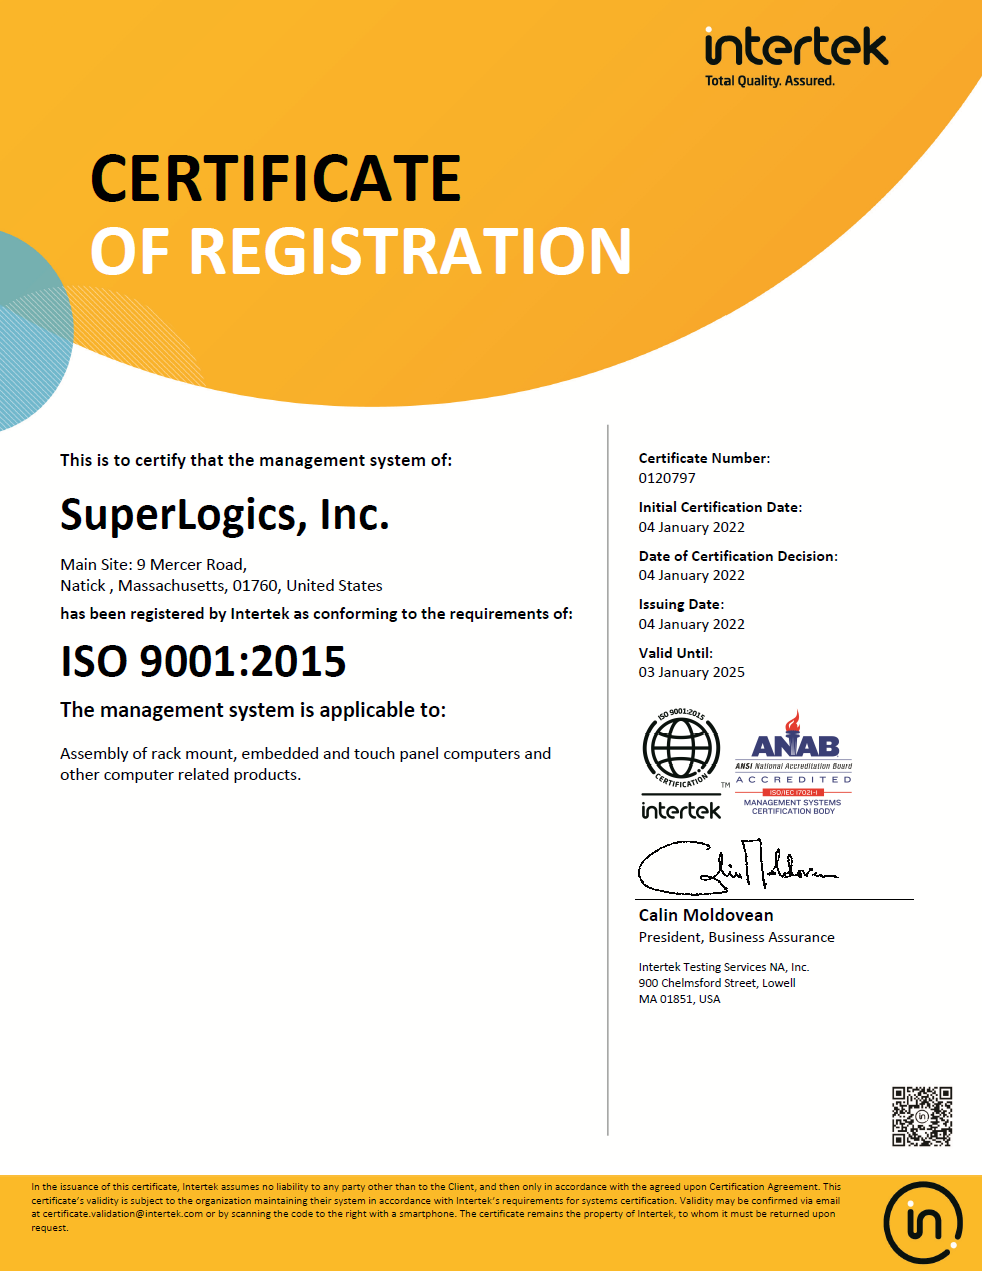 SuperLogics ISO 9001:2015 Certification